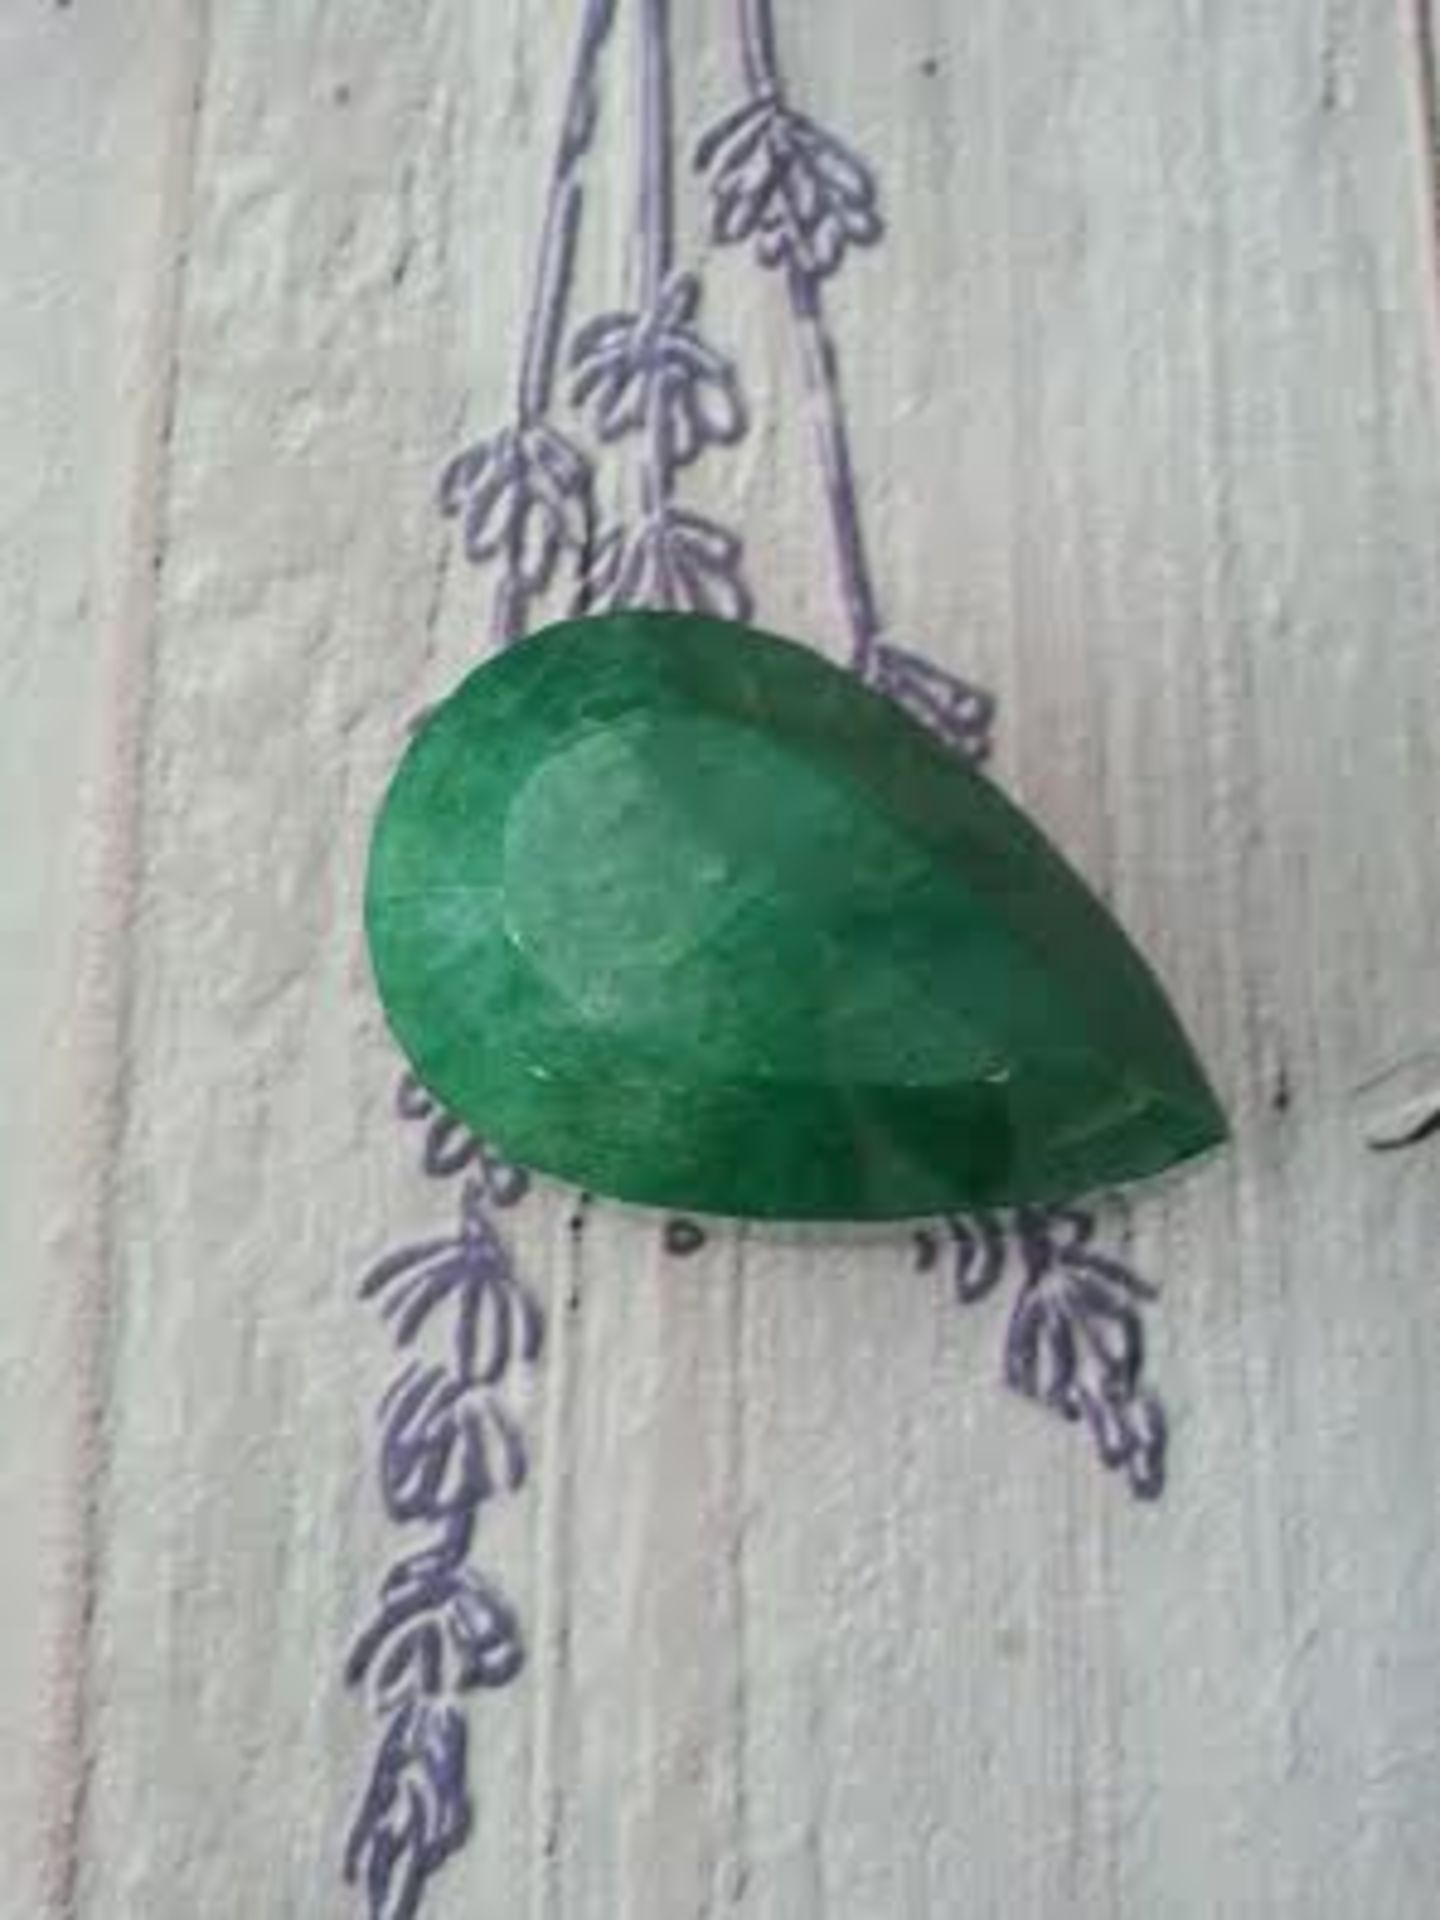 771 ct top green rare huge unique natural brazilian emerald - Image 2 of 3